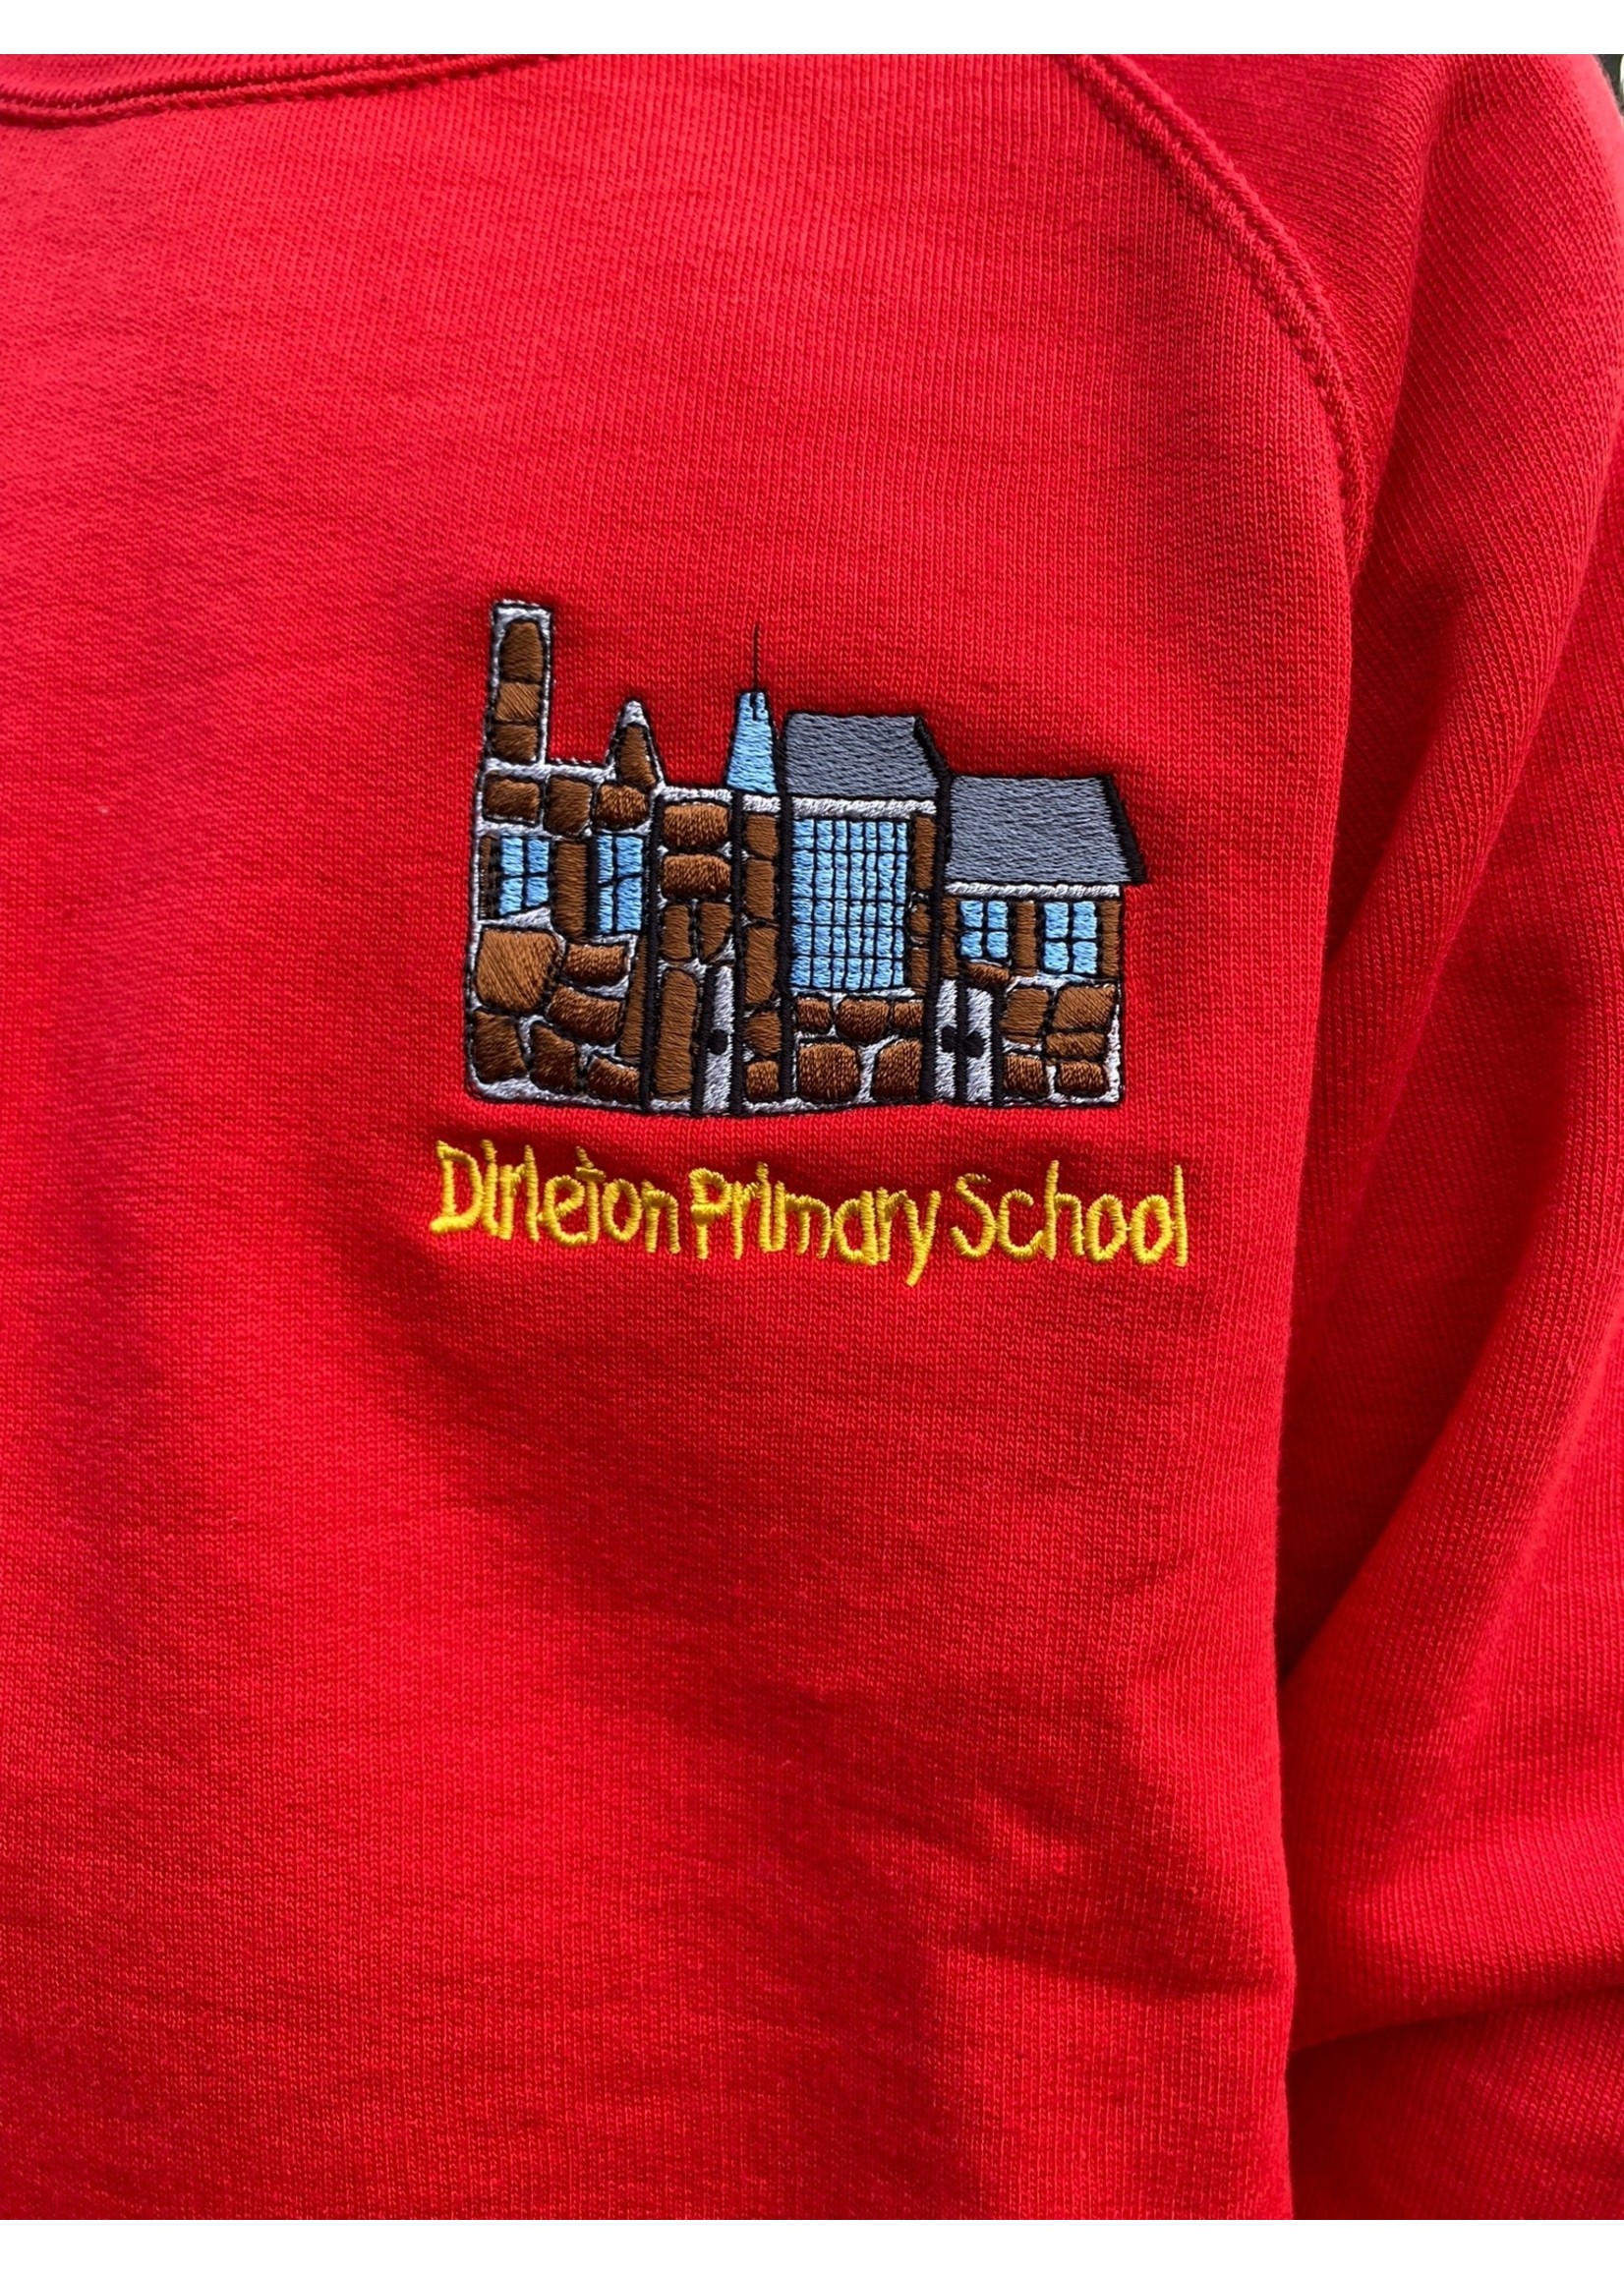 School Uniform - SWEATSHIRT - DIRLETON